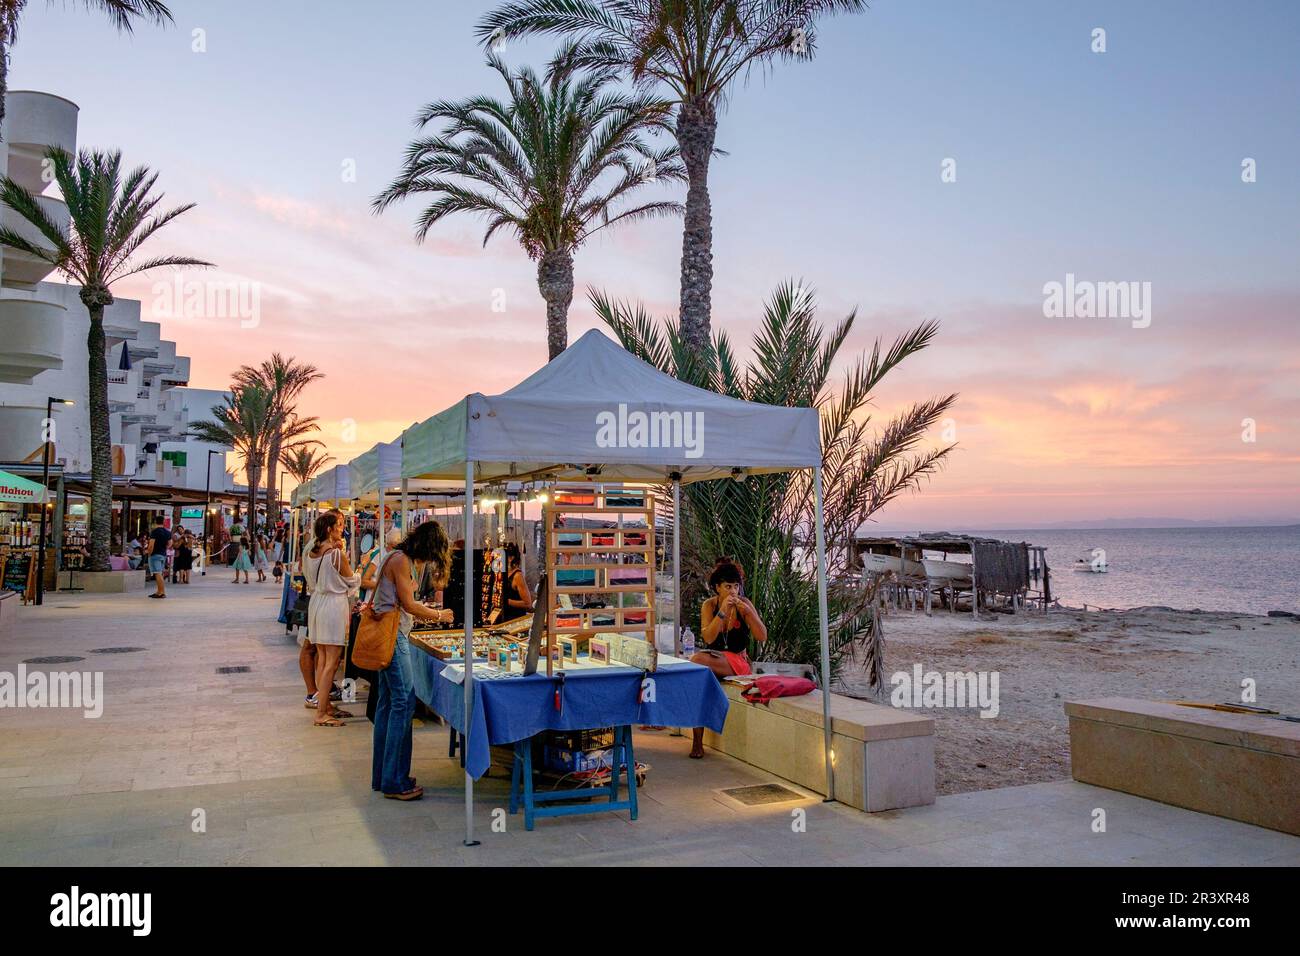 Formentera, balearic islands, Spain. Stock Photo